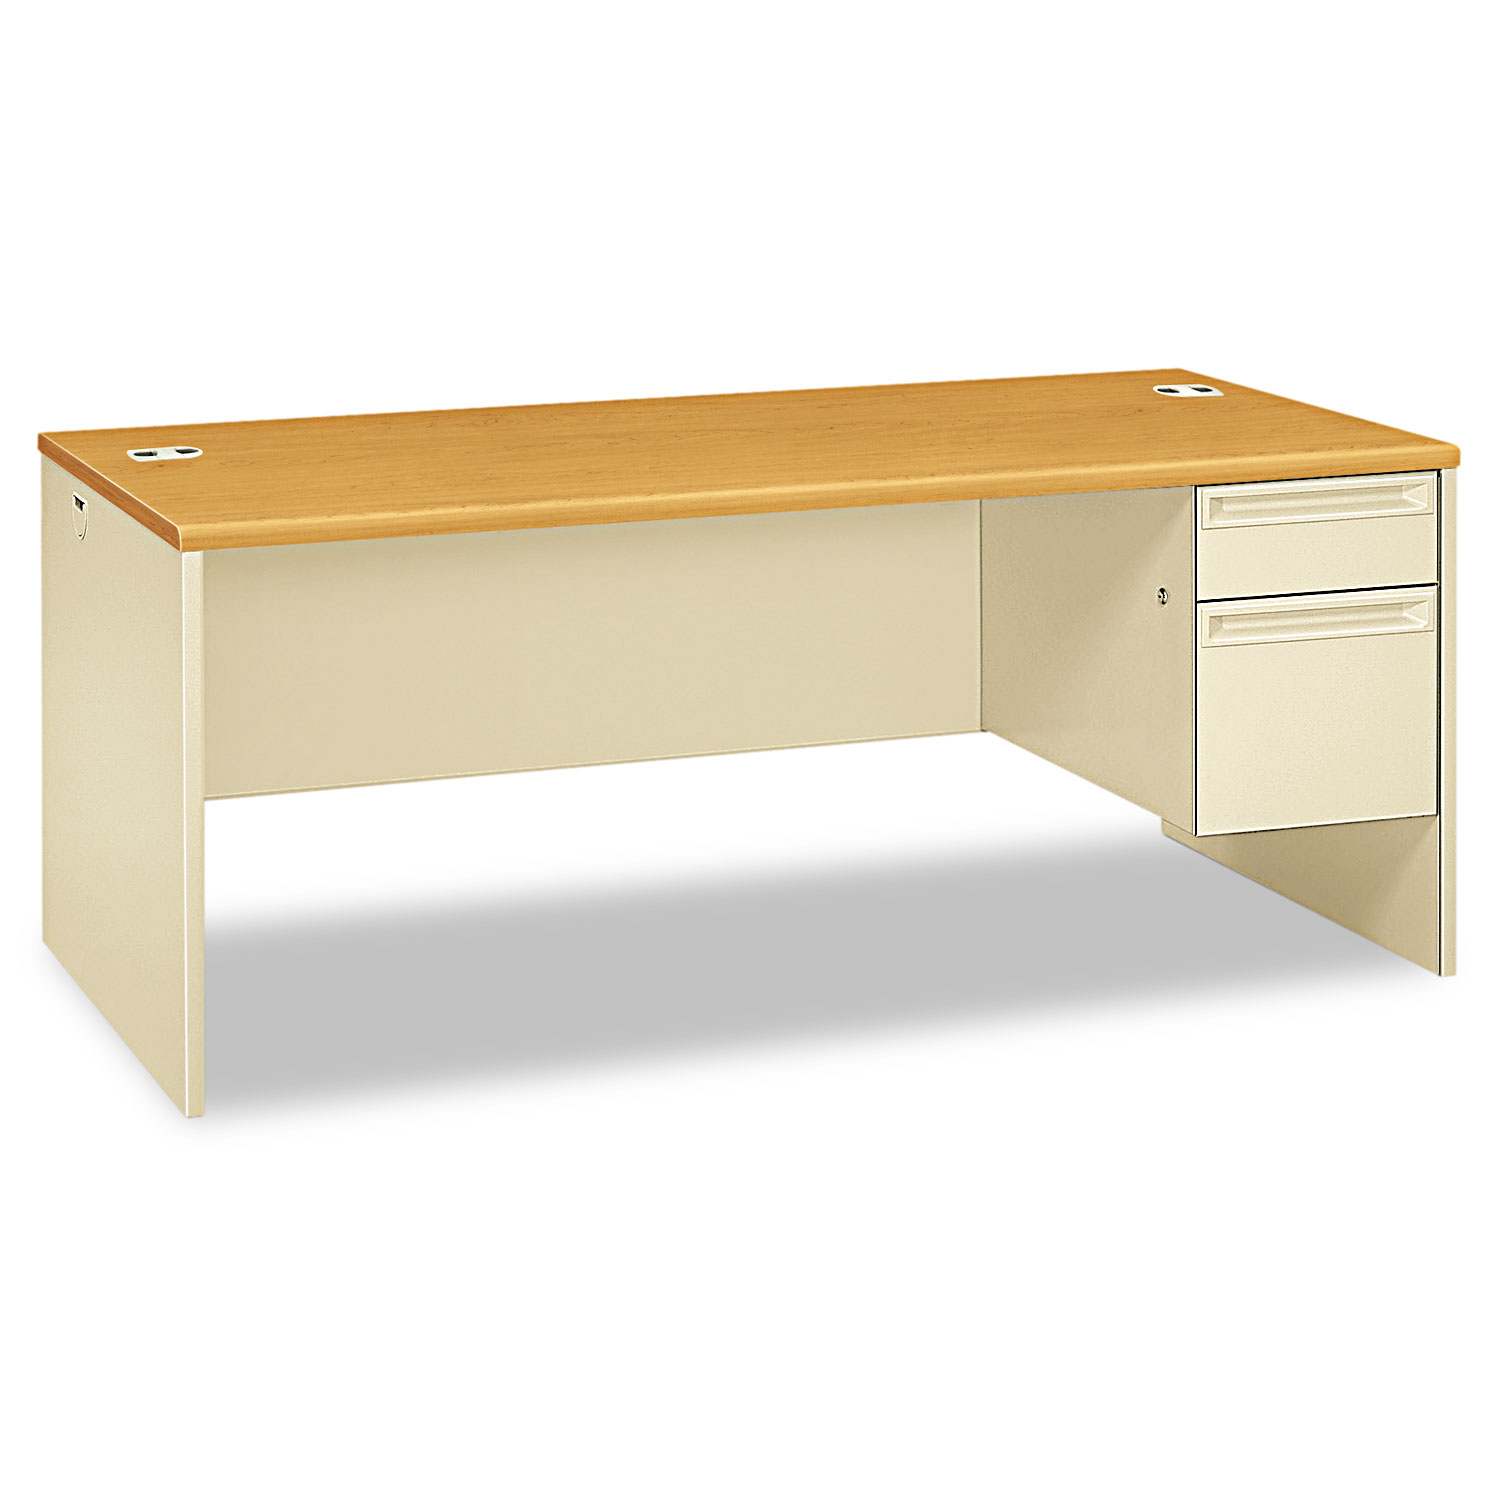  HON H38293R.C.L 38000 Series Right Pedestal Desk, 72w x 36d x 29.5h, Harvest/Putty (HON38293RCL) 